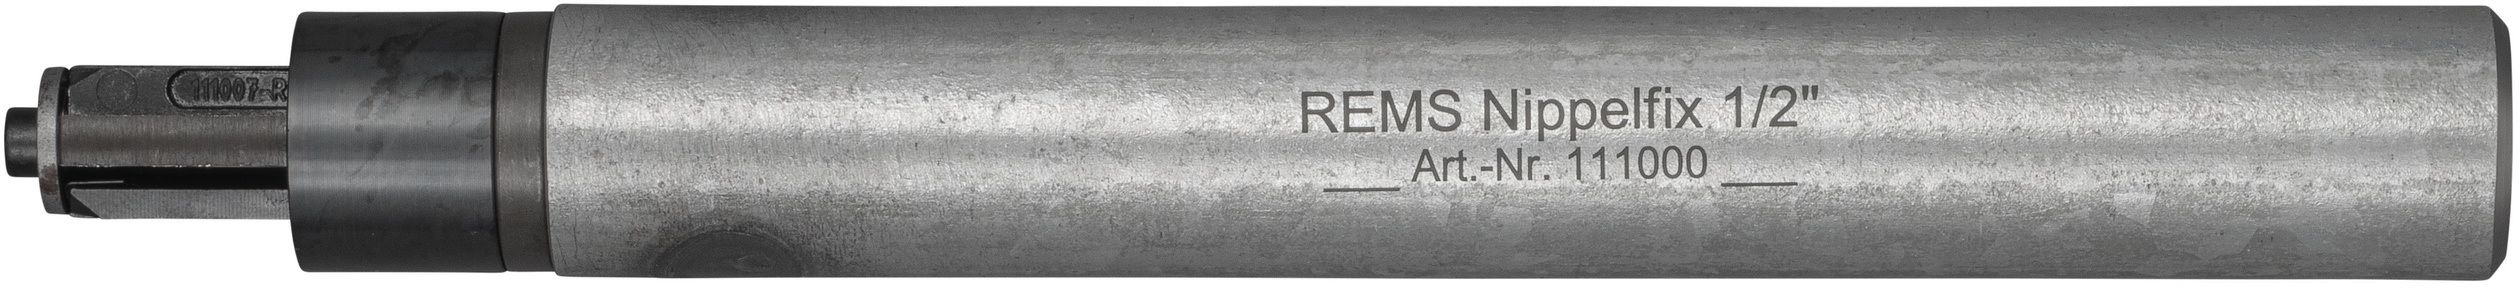 REMS Nippelfix 111100, 3/4" - Sanitärwerkzeuge